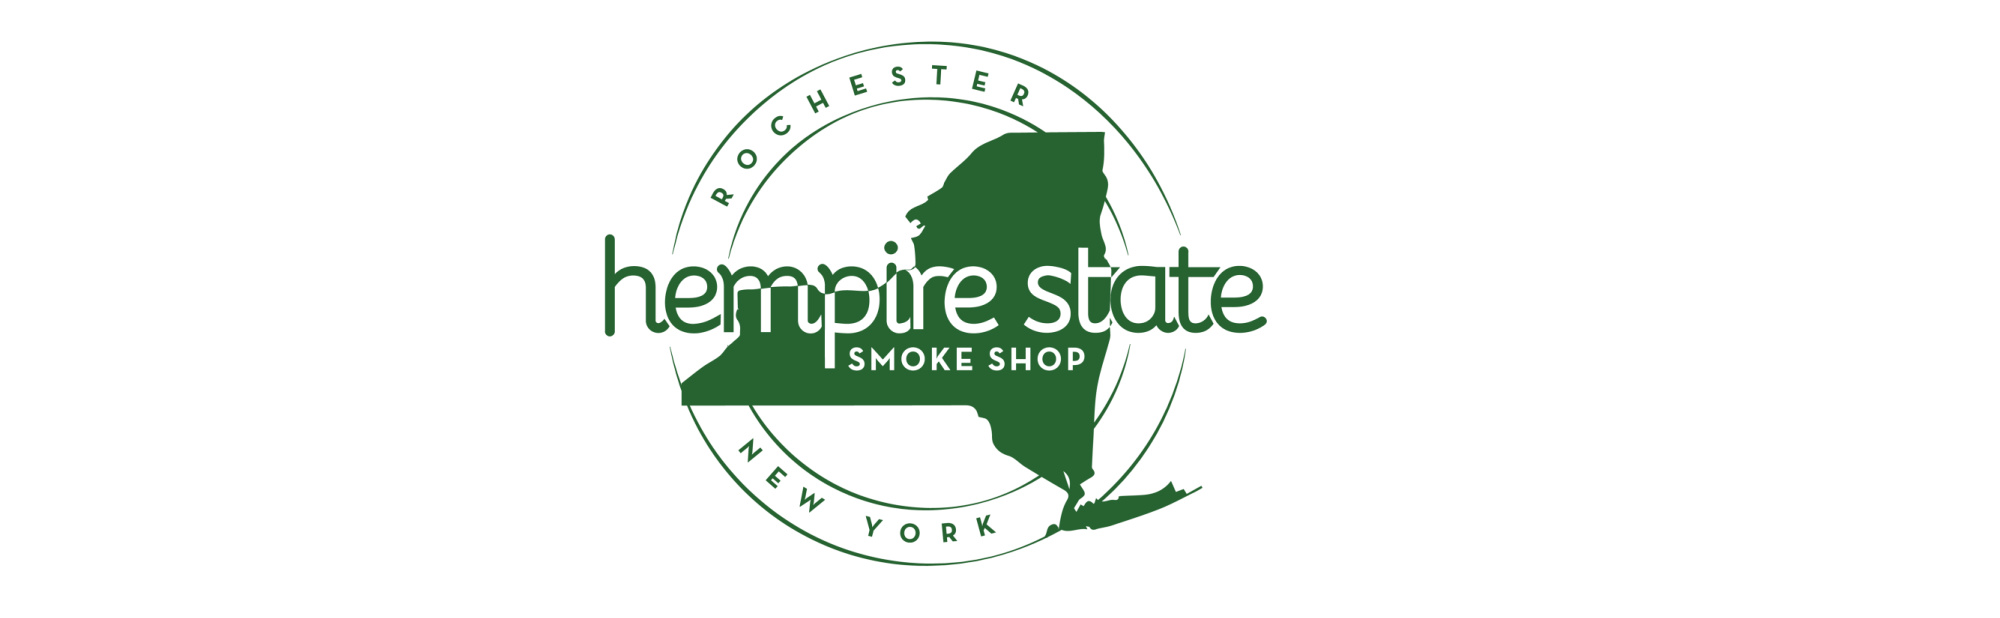 image of hempire state smoke shop in rochestar ny